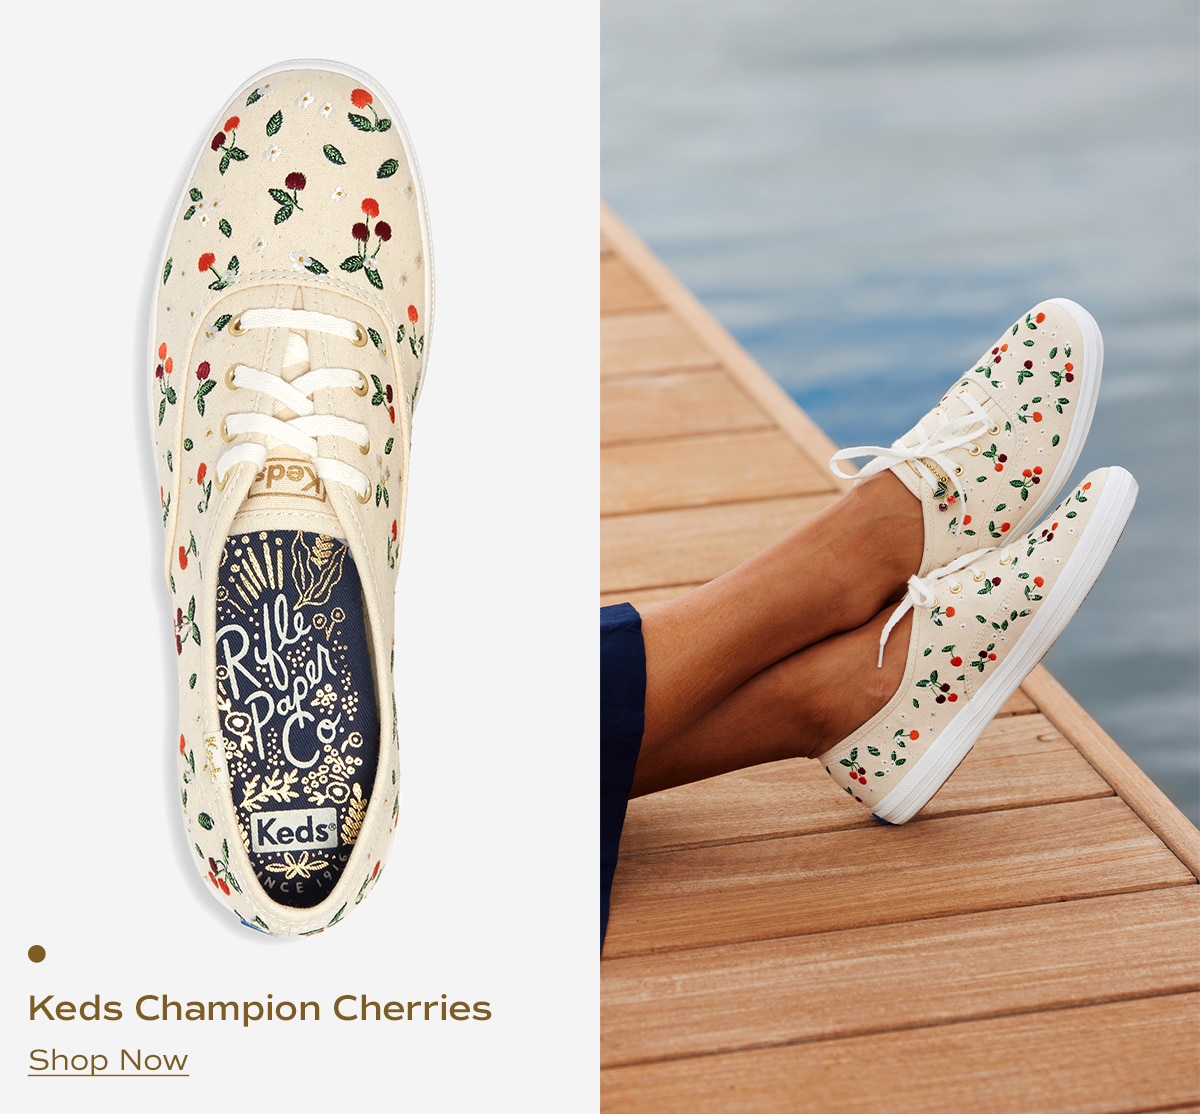 Keds Champion Cherries | Shop Now